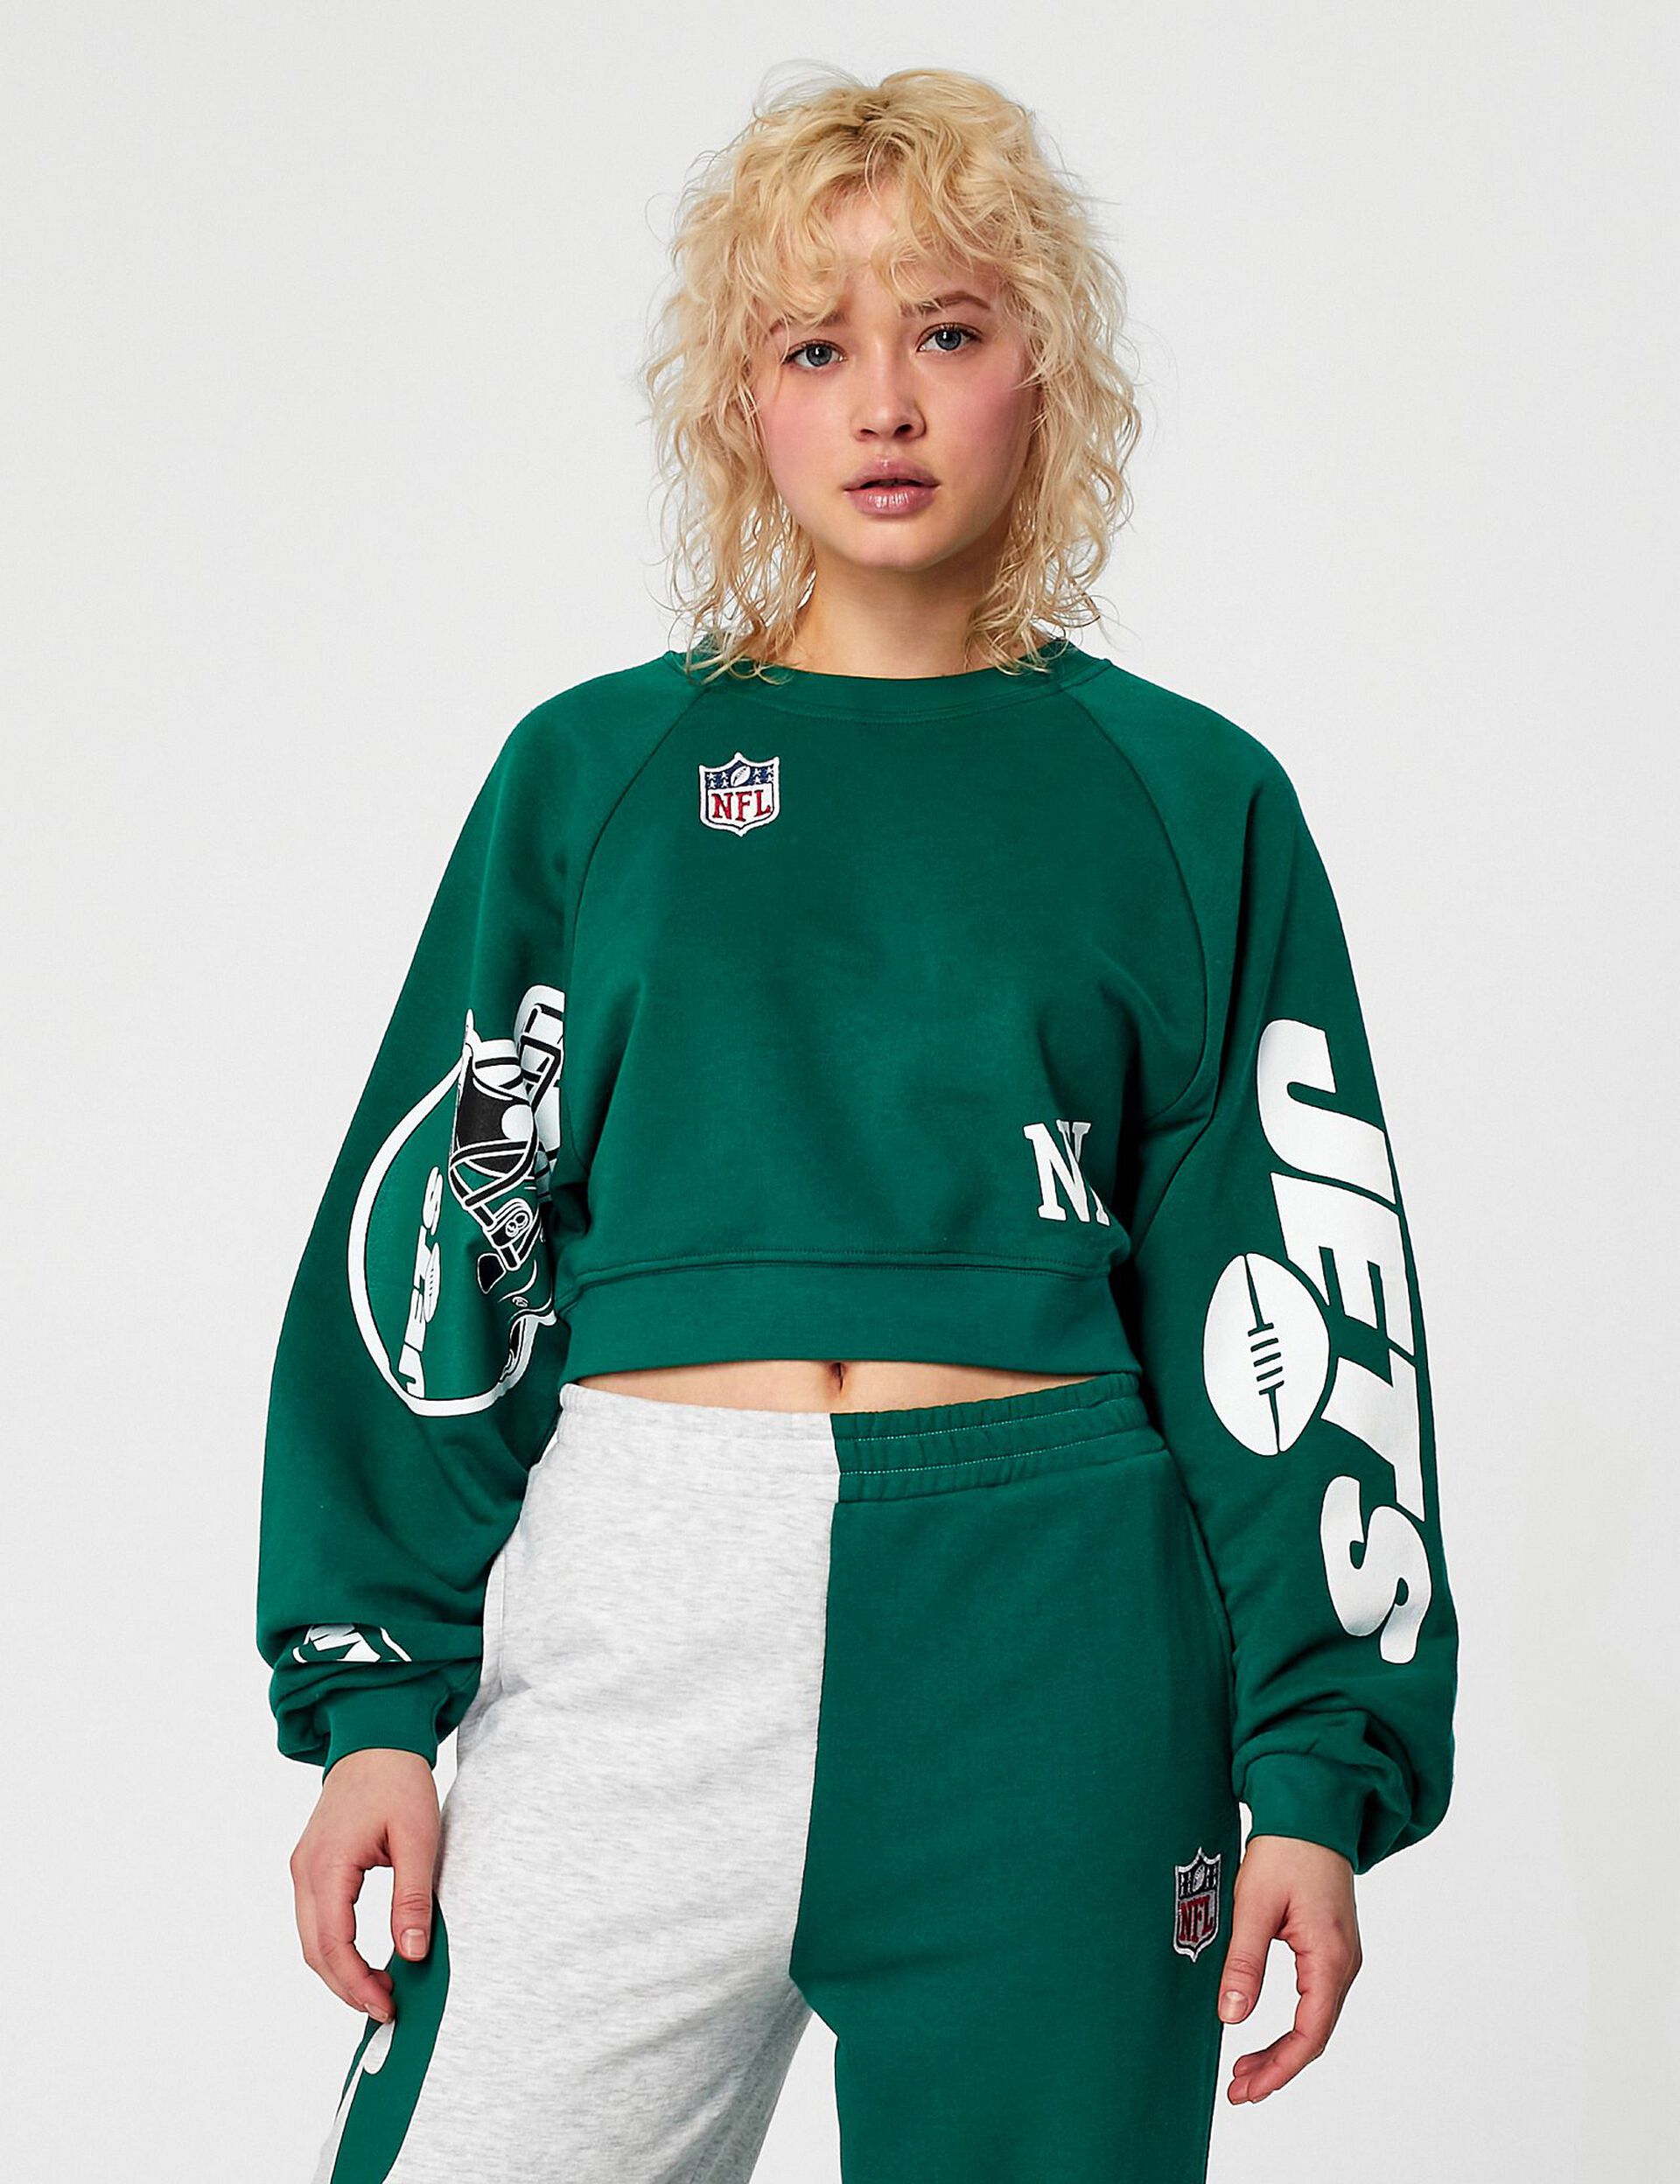 NFL Team Jets sweatshirt